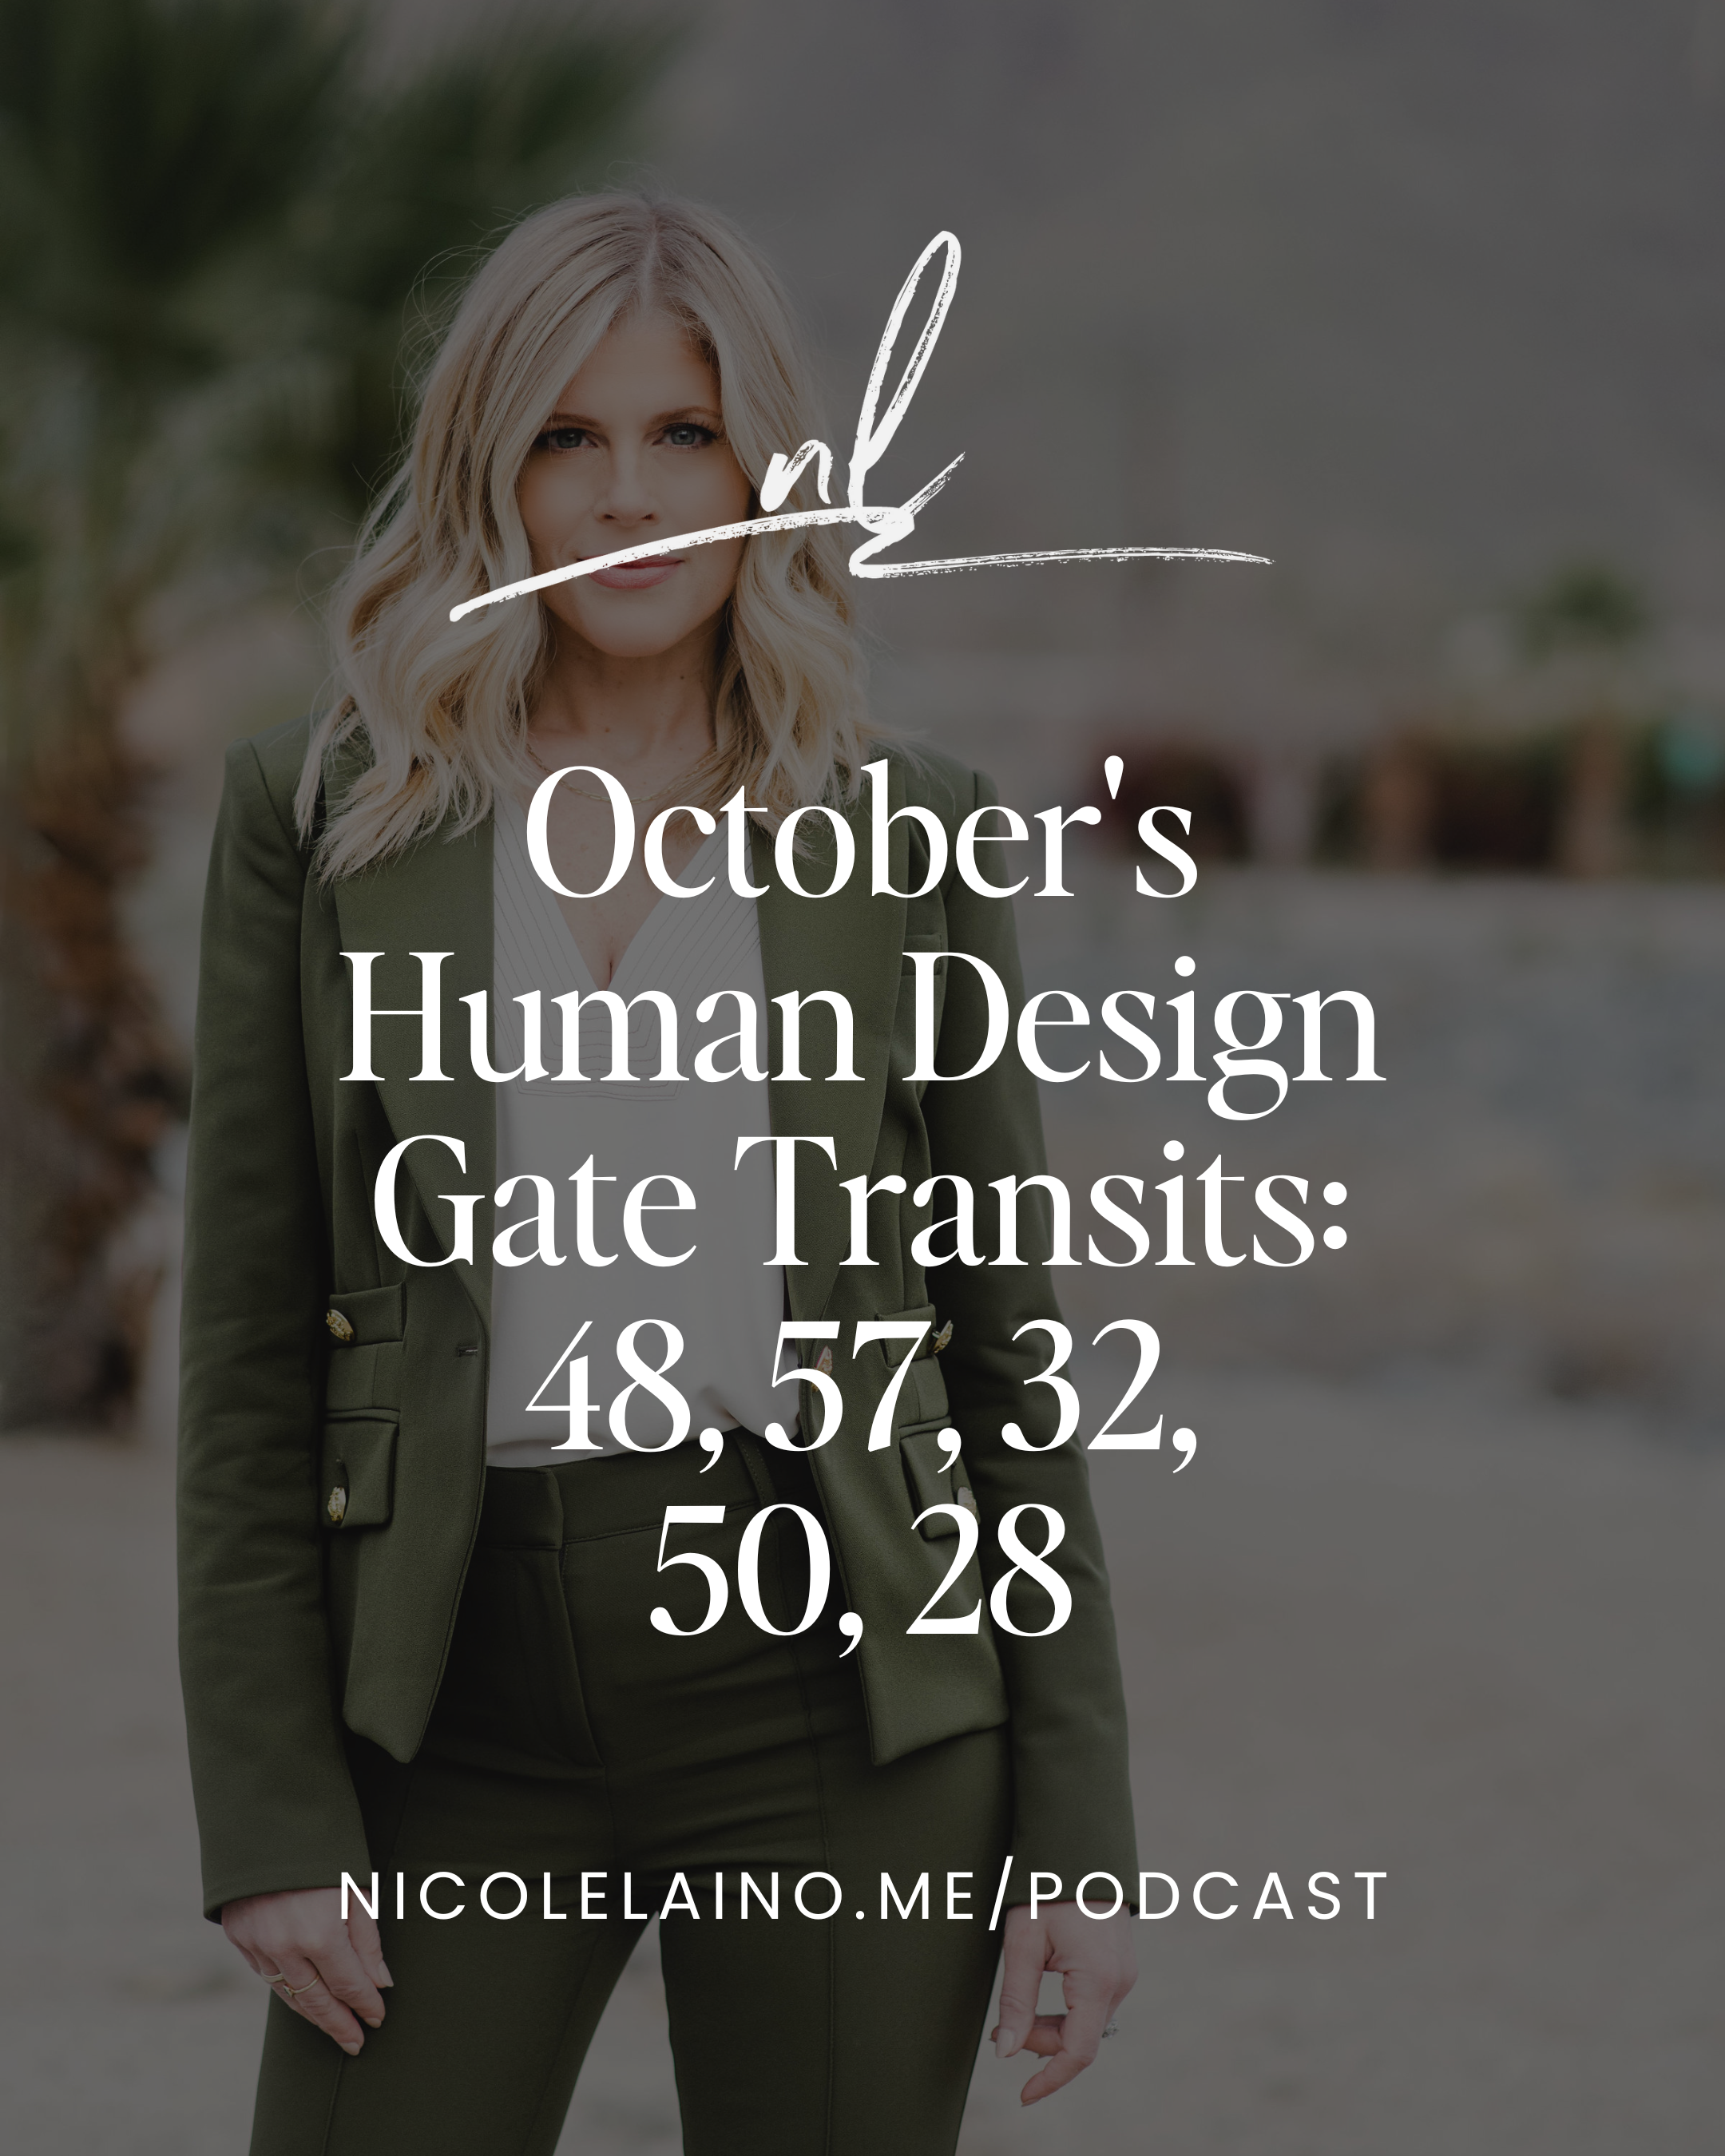 October's Human Design Gate Transits: 48, 57, 32, 50, 28